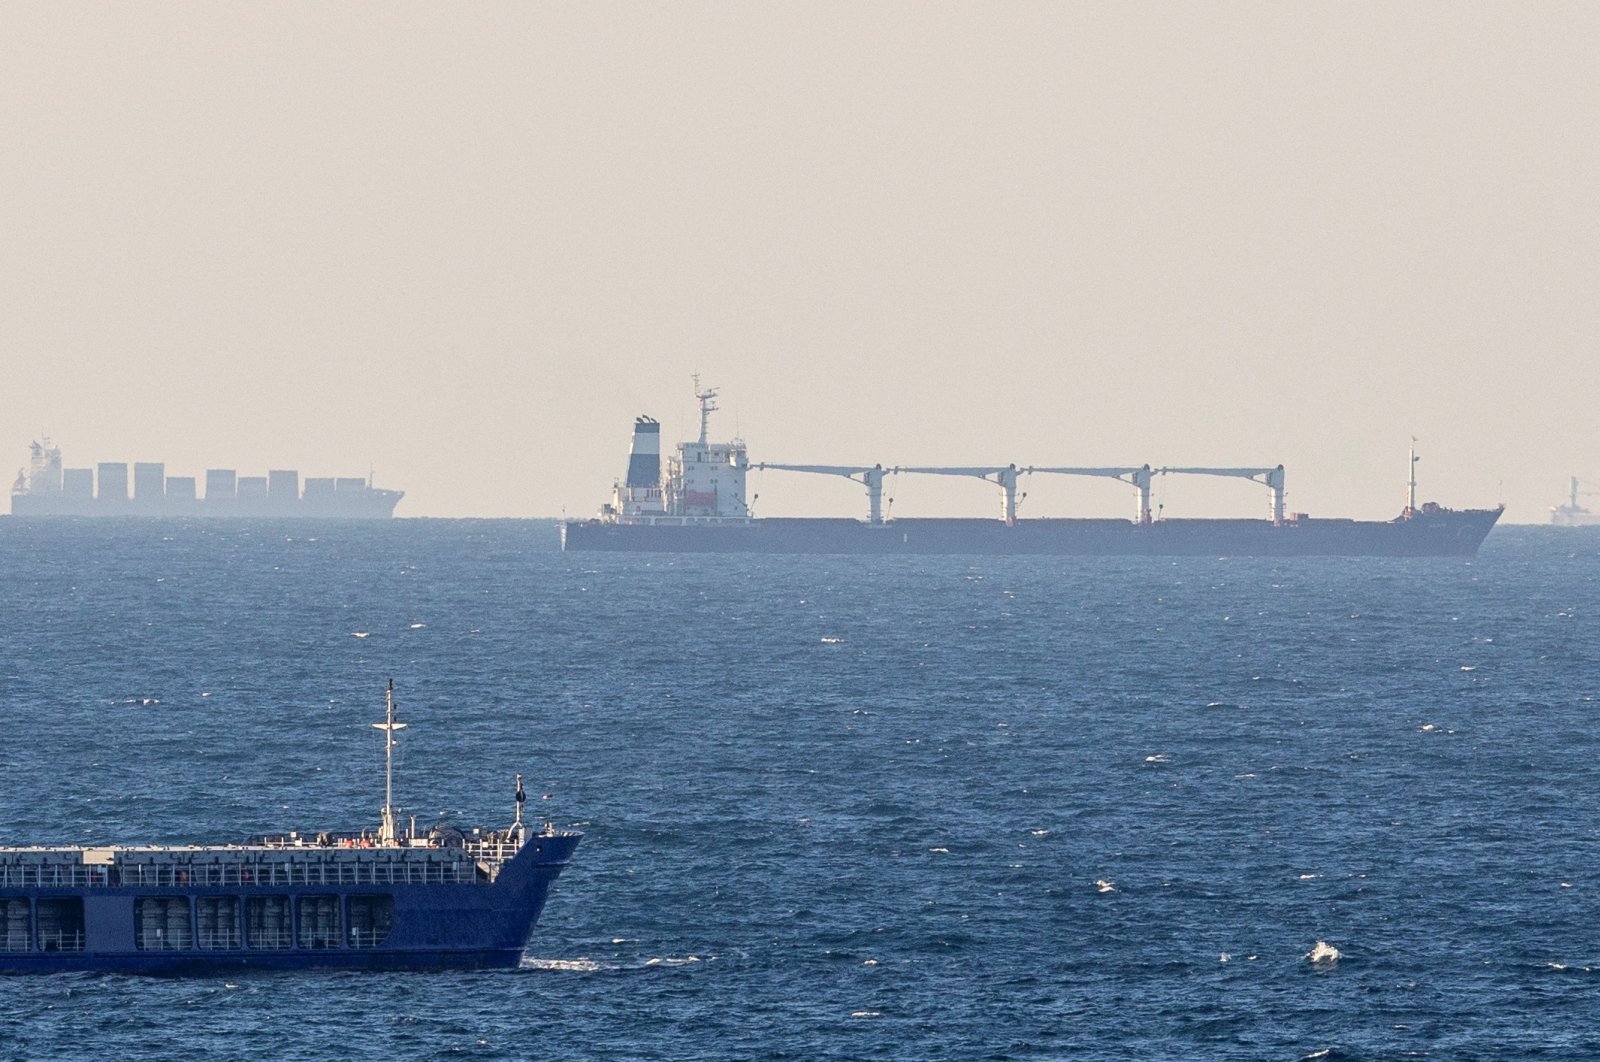 The Sierra Leone-flagged cargo ship Razoni, carrying Ukrainian grain, is seen in the Black Sea off Kilyos, near Istanbul, Turkey Aug. 2, 2022. (Reuters Photo)